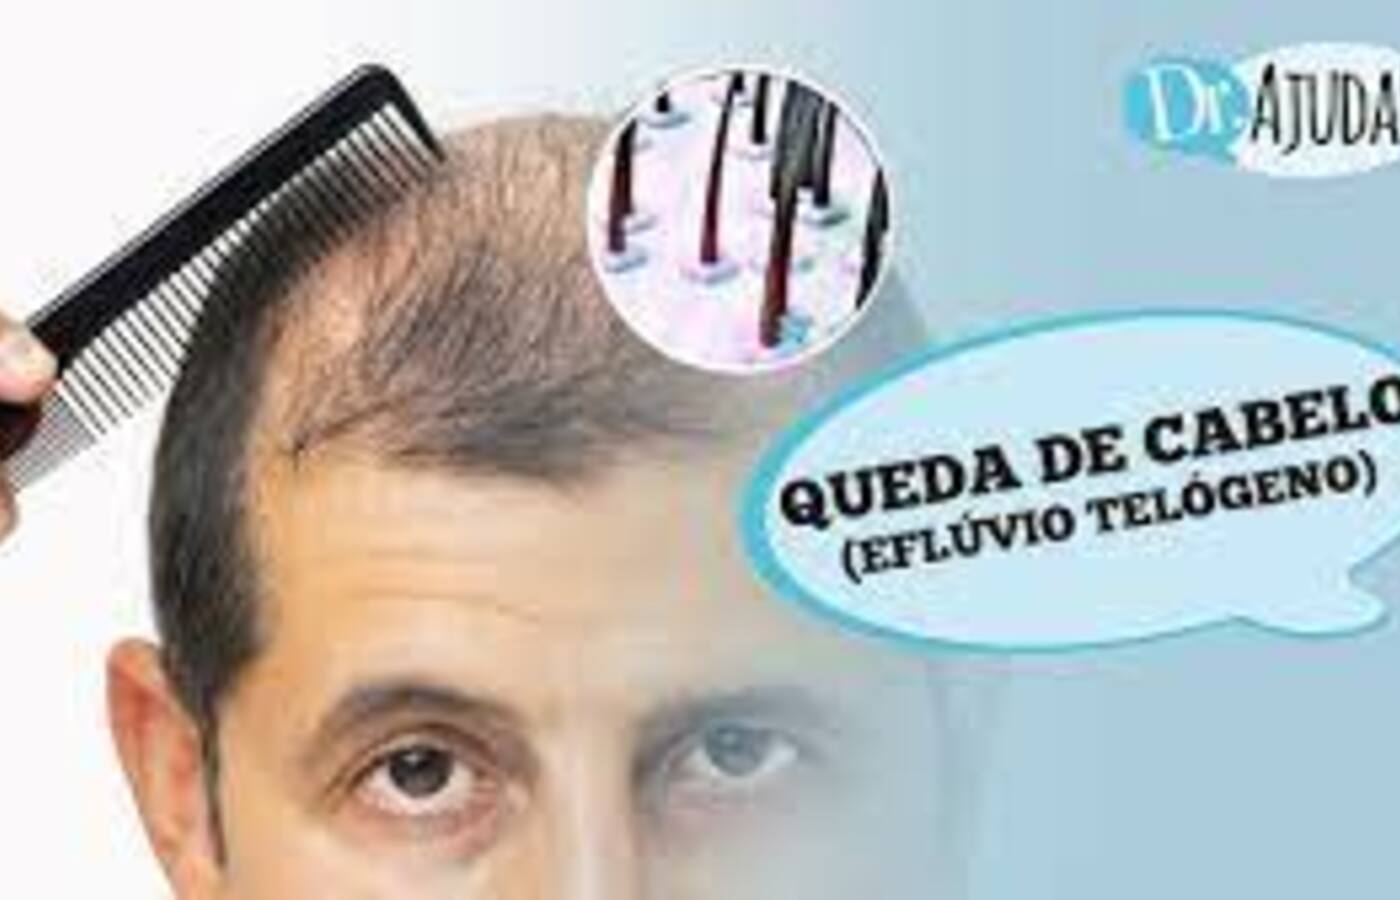 queda-de-cabelo:-entenda-as-causas-e-tratamentos-do-efluvio-telogeno